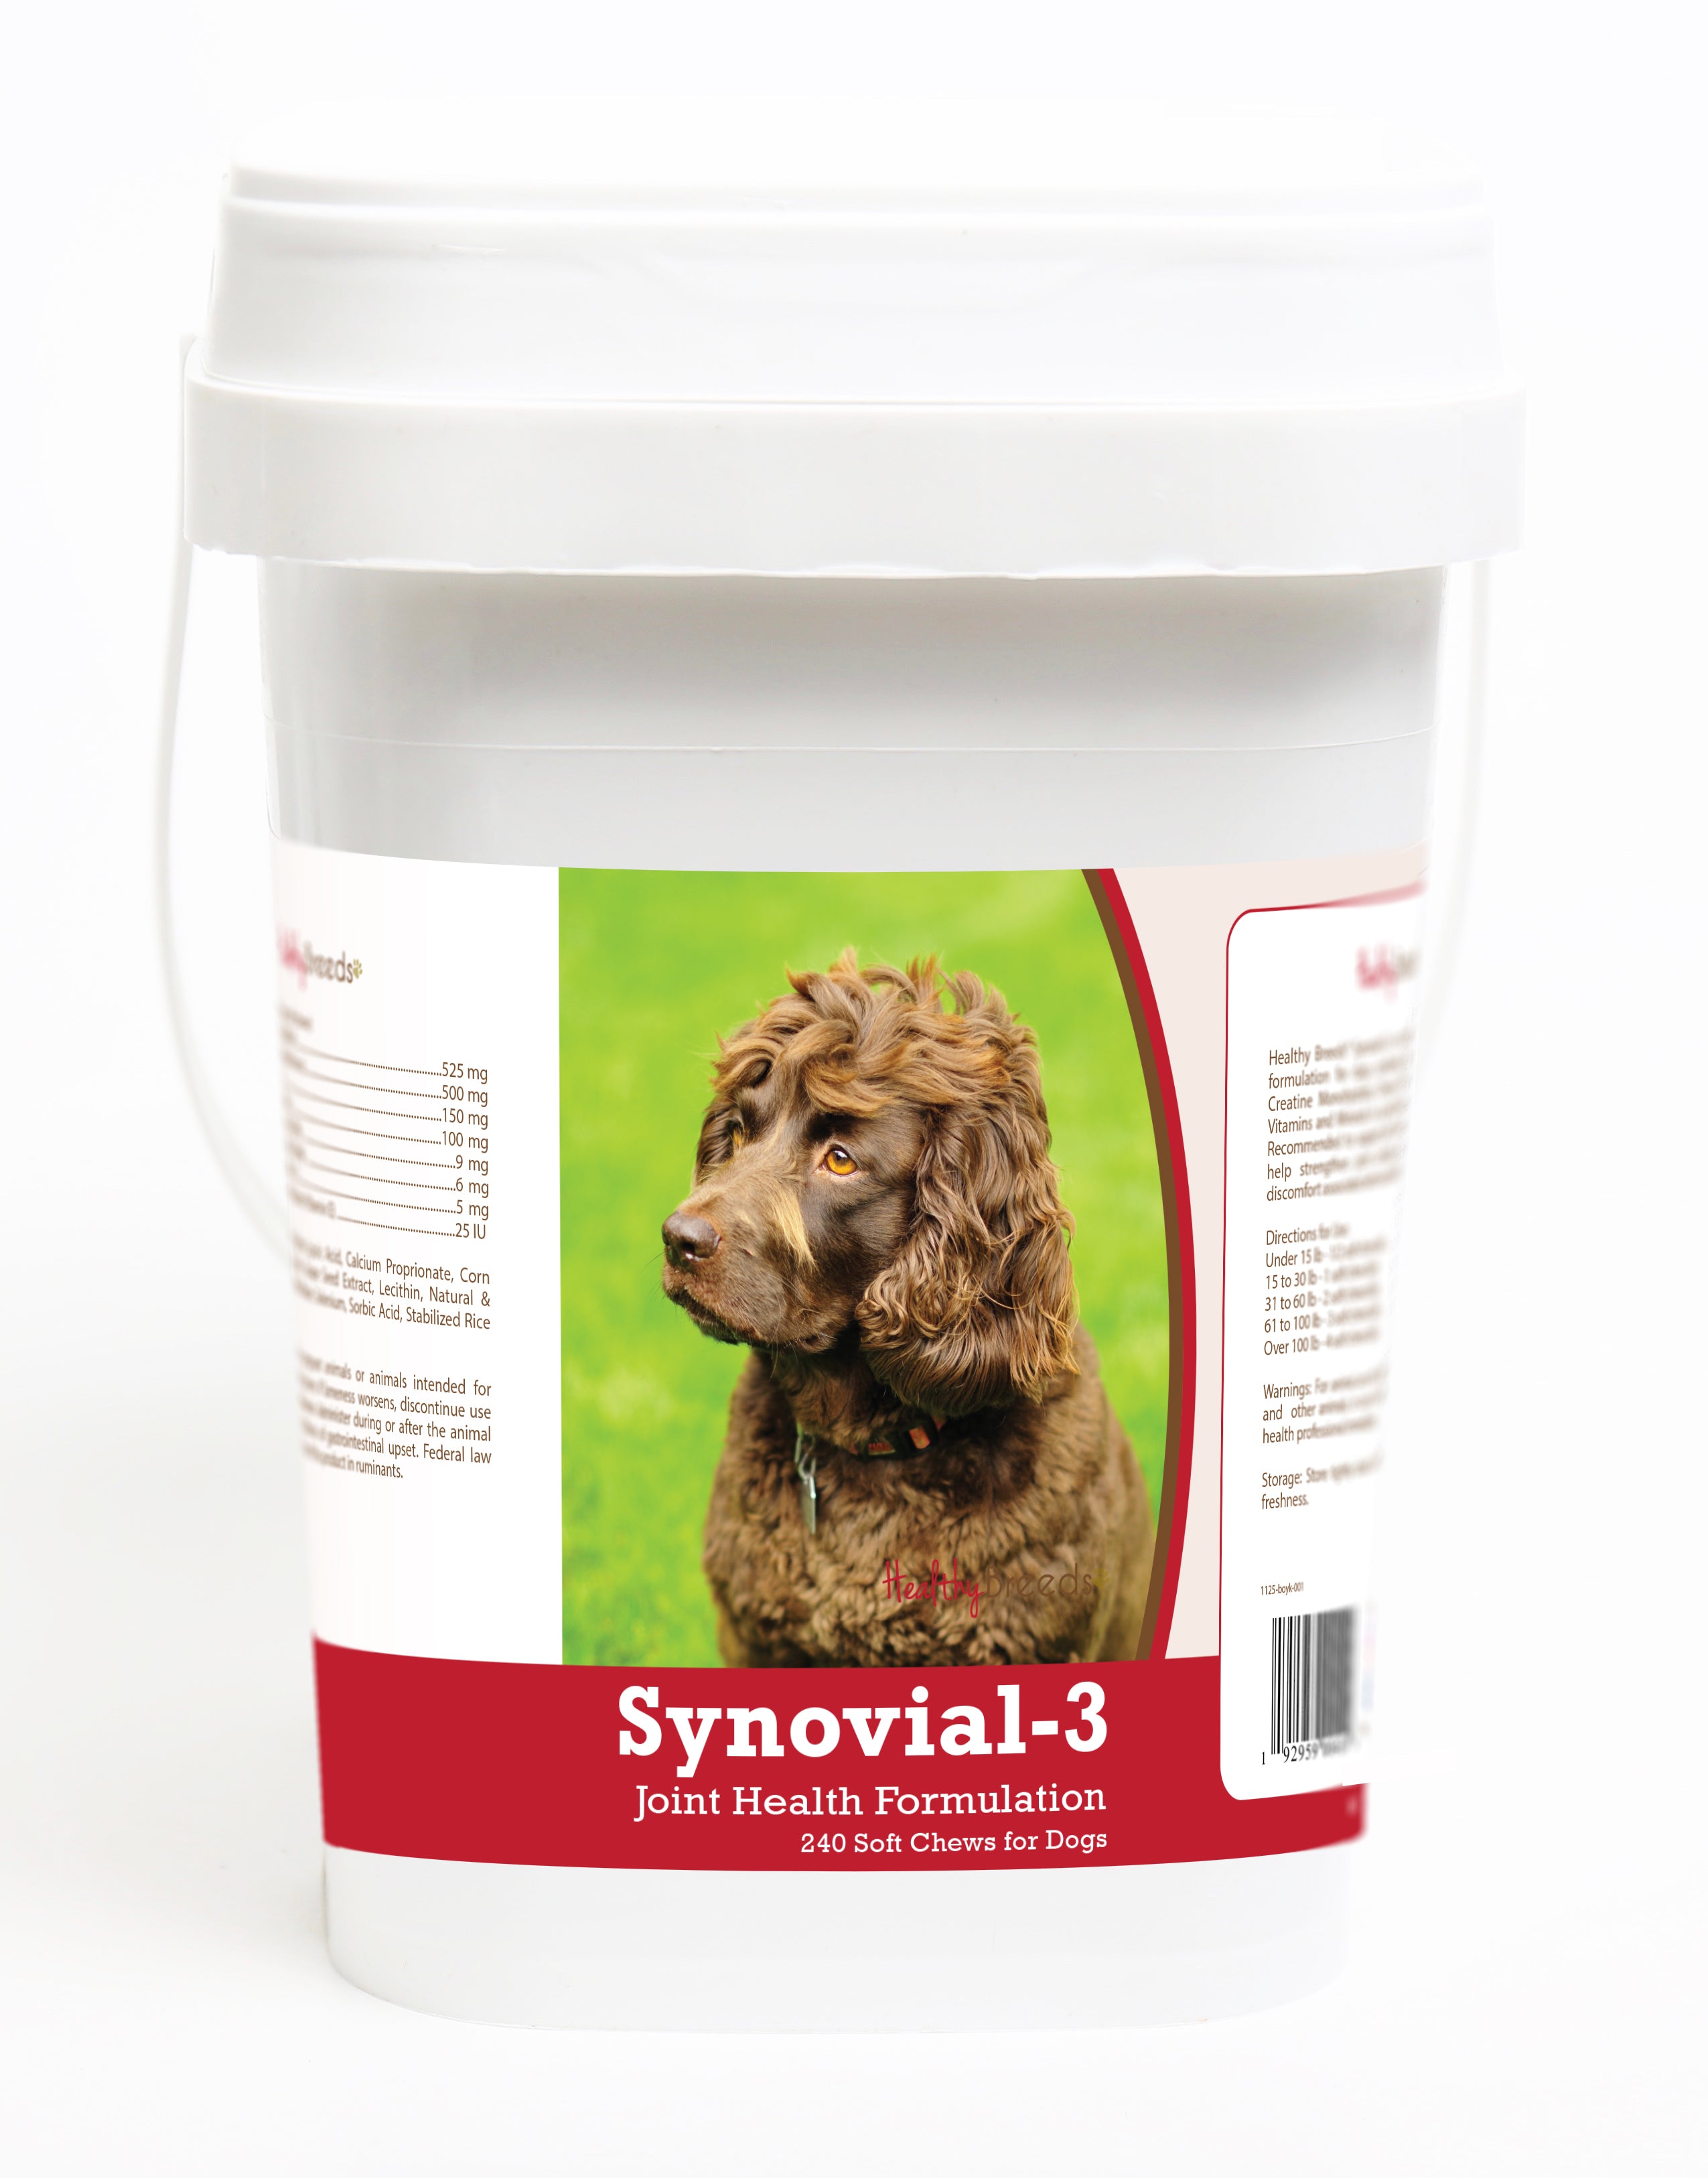 Boykin Spaniel Synovial-3 Joint Health Formulation Soft Chews 240 Count